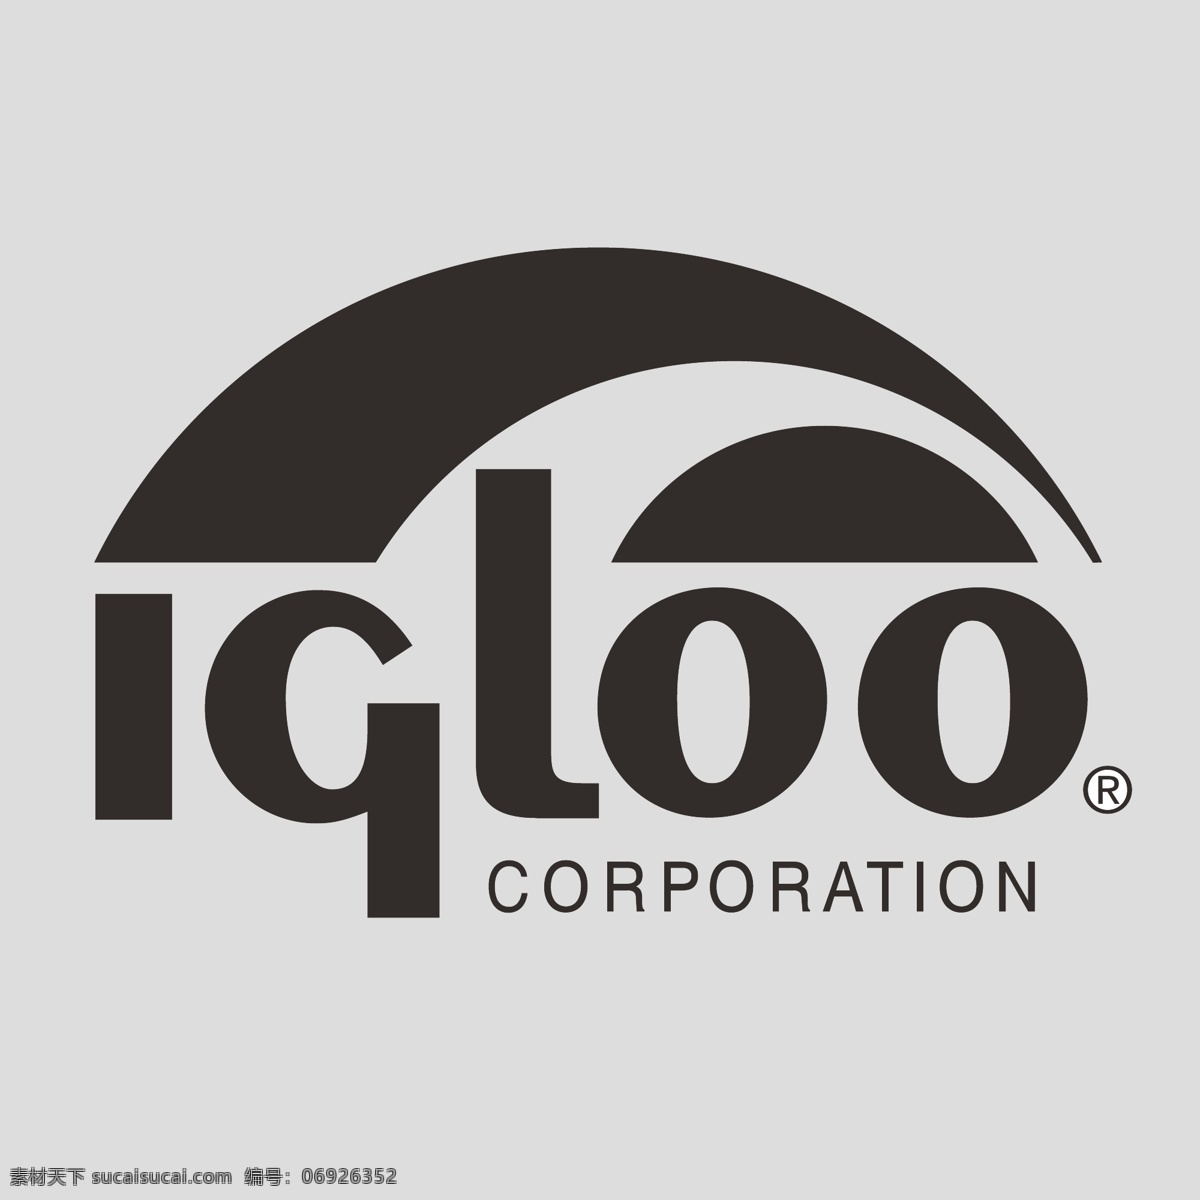 corporation 标志 iqloo 贸易 企业 logo 企业logo 国际 著名 外贸 矢量 素材标志 矢量图